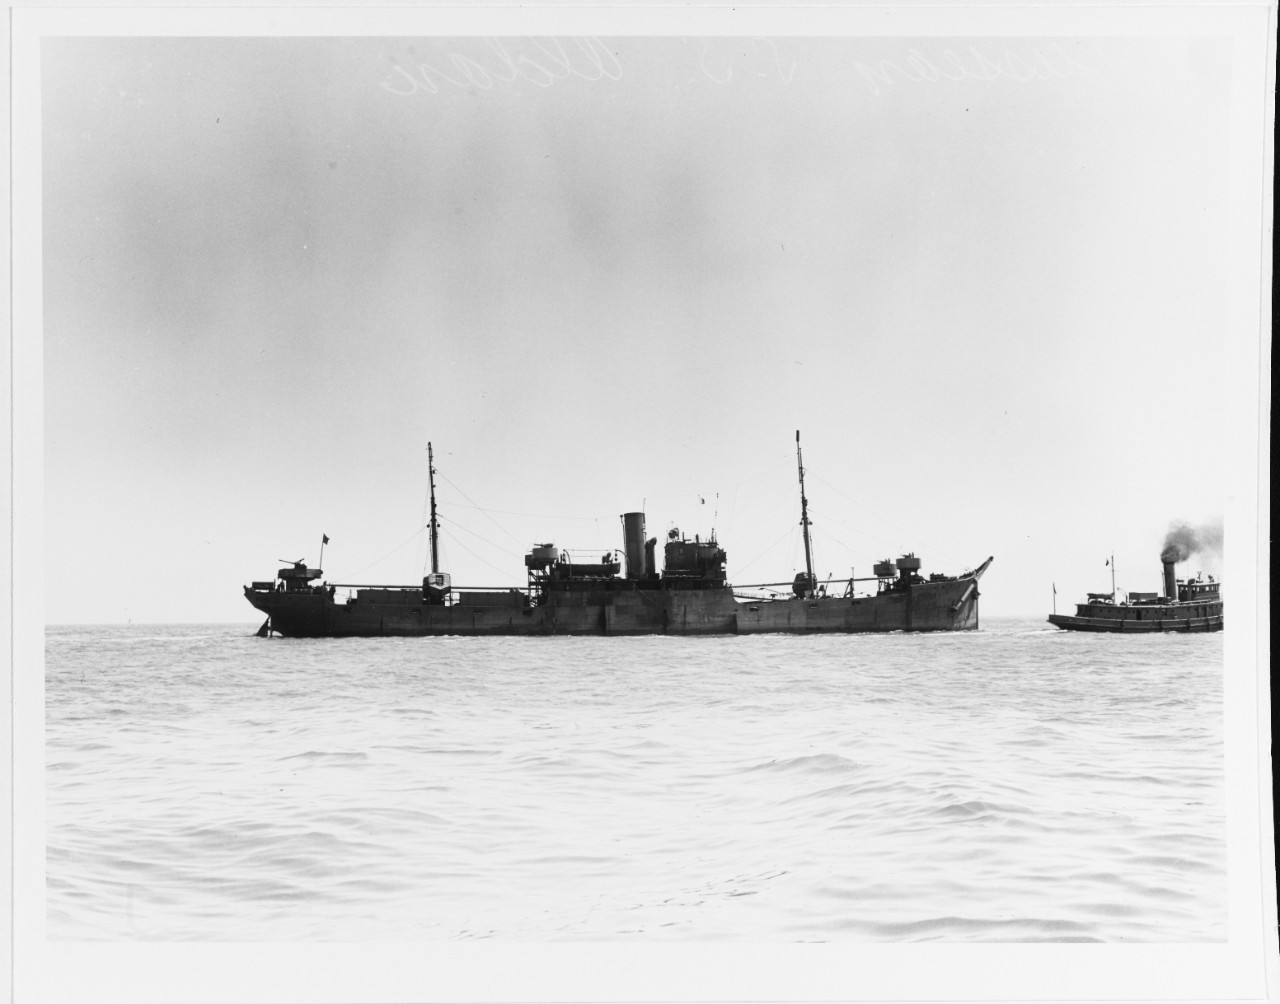 S.S. ALDAN (U.S.S.R. Merchant Cargo Ship, 1912-66, under this name 1934-1966)